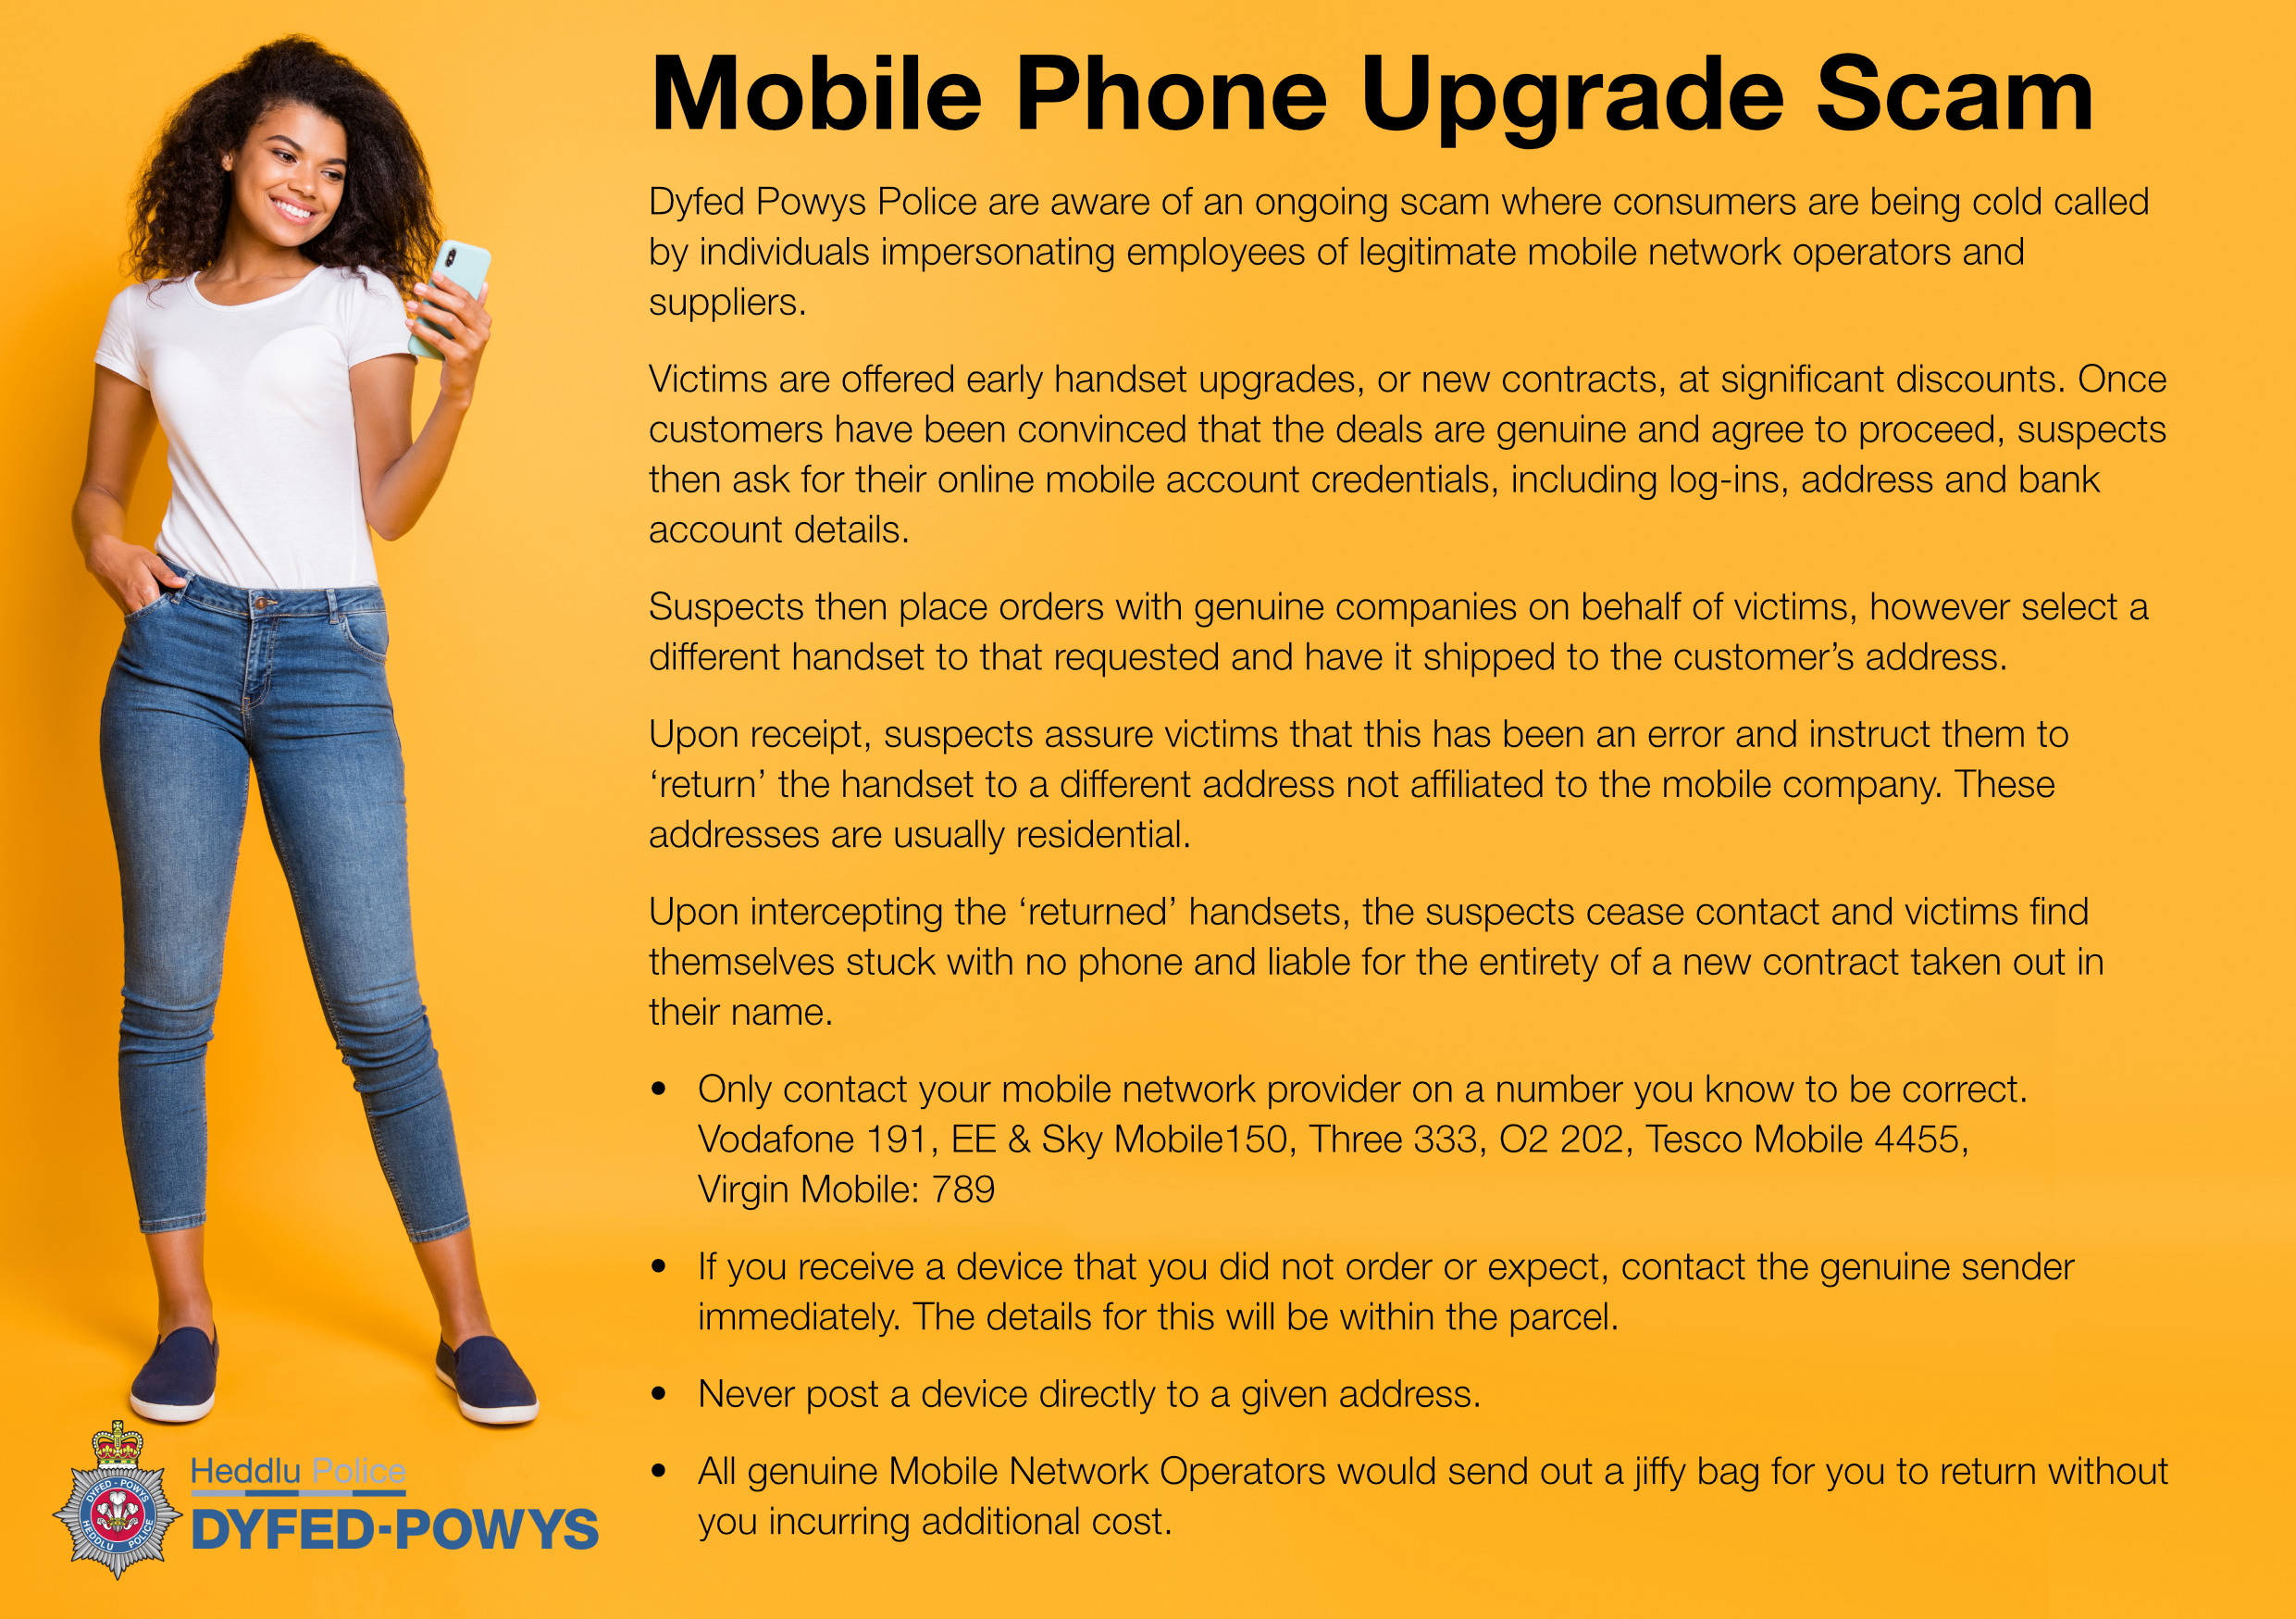 Mobile phone upgrade scam